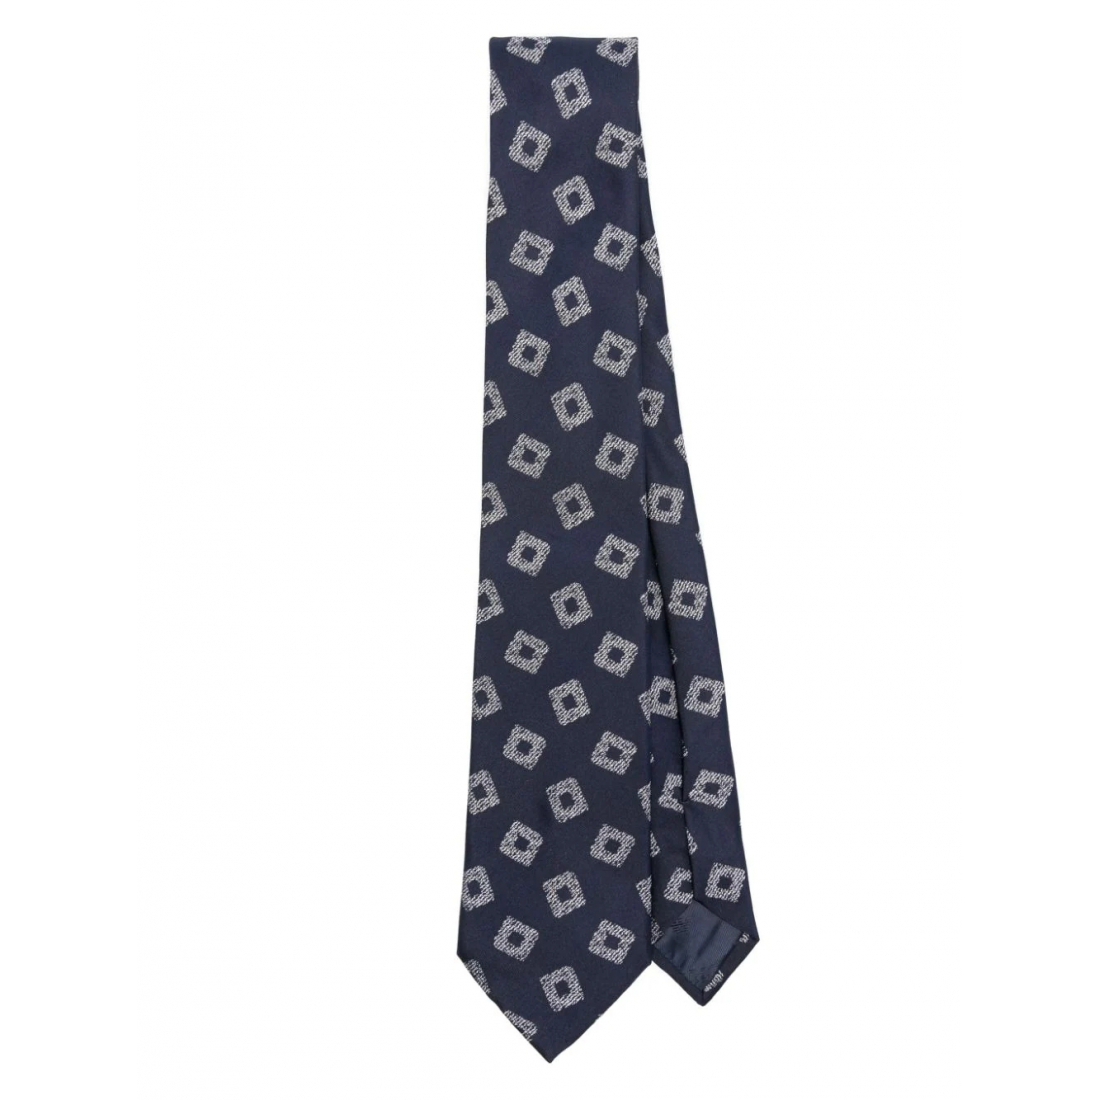 'Patterned-Jacquard' Krawatte für Herren